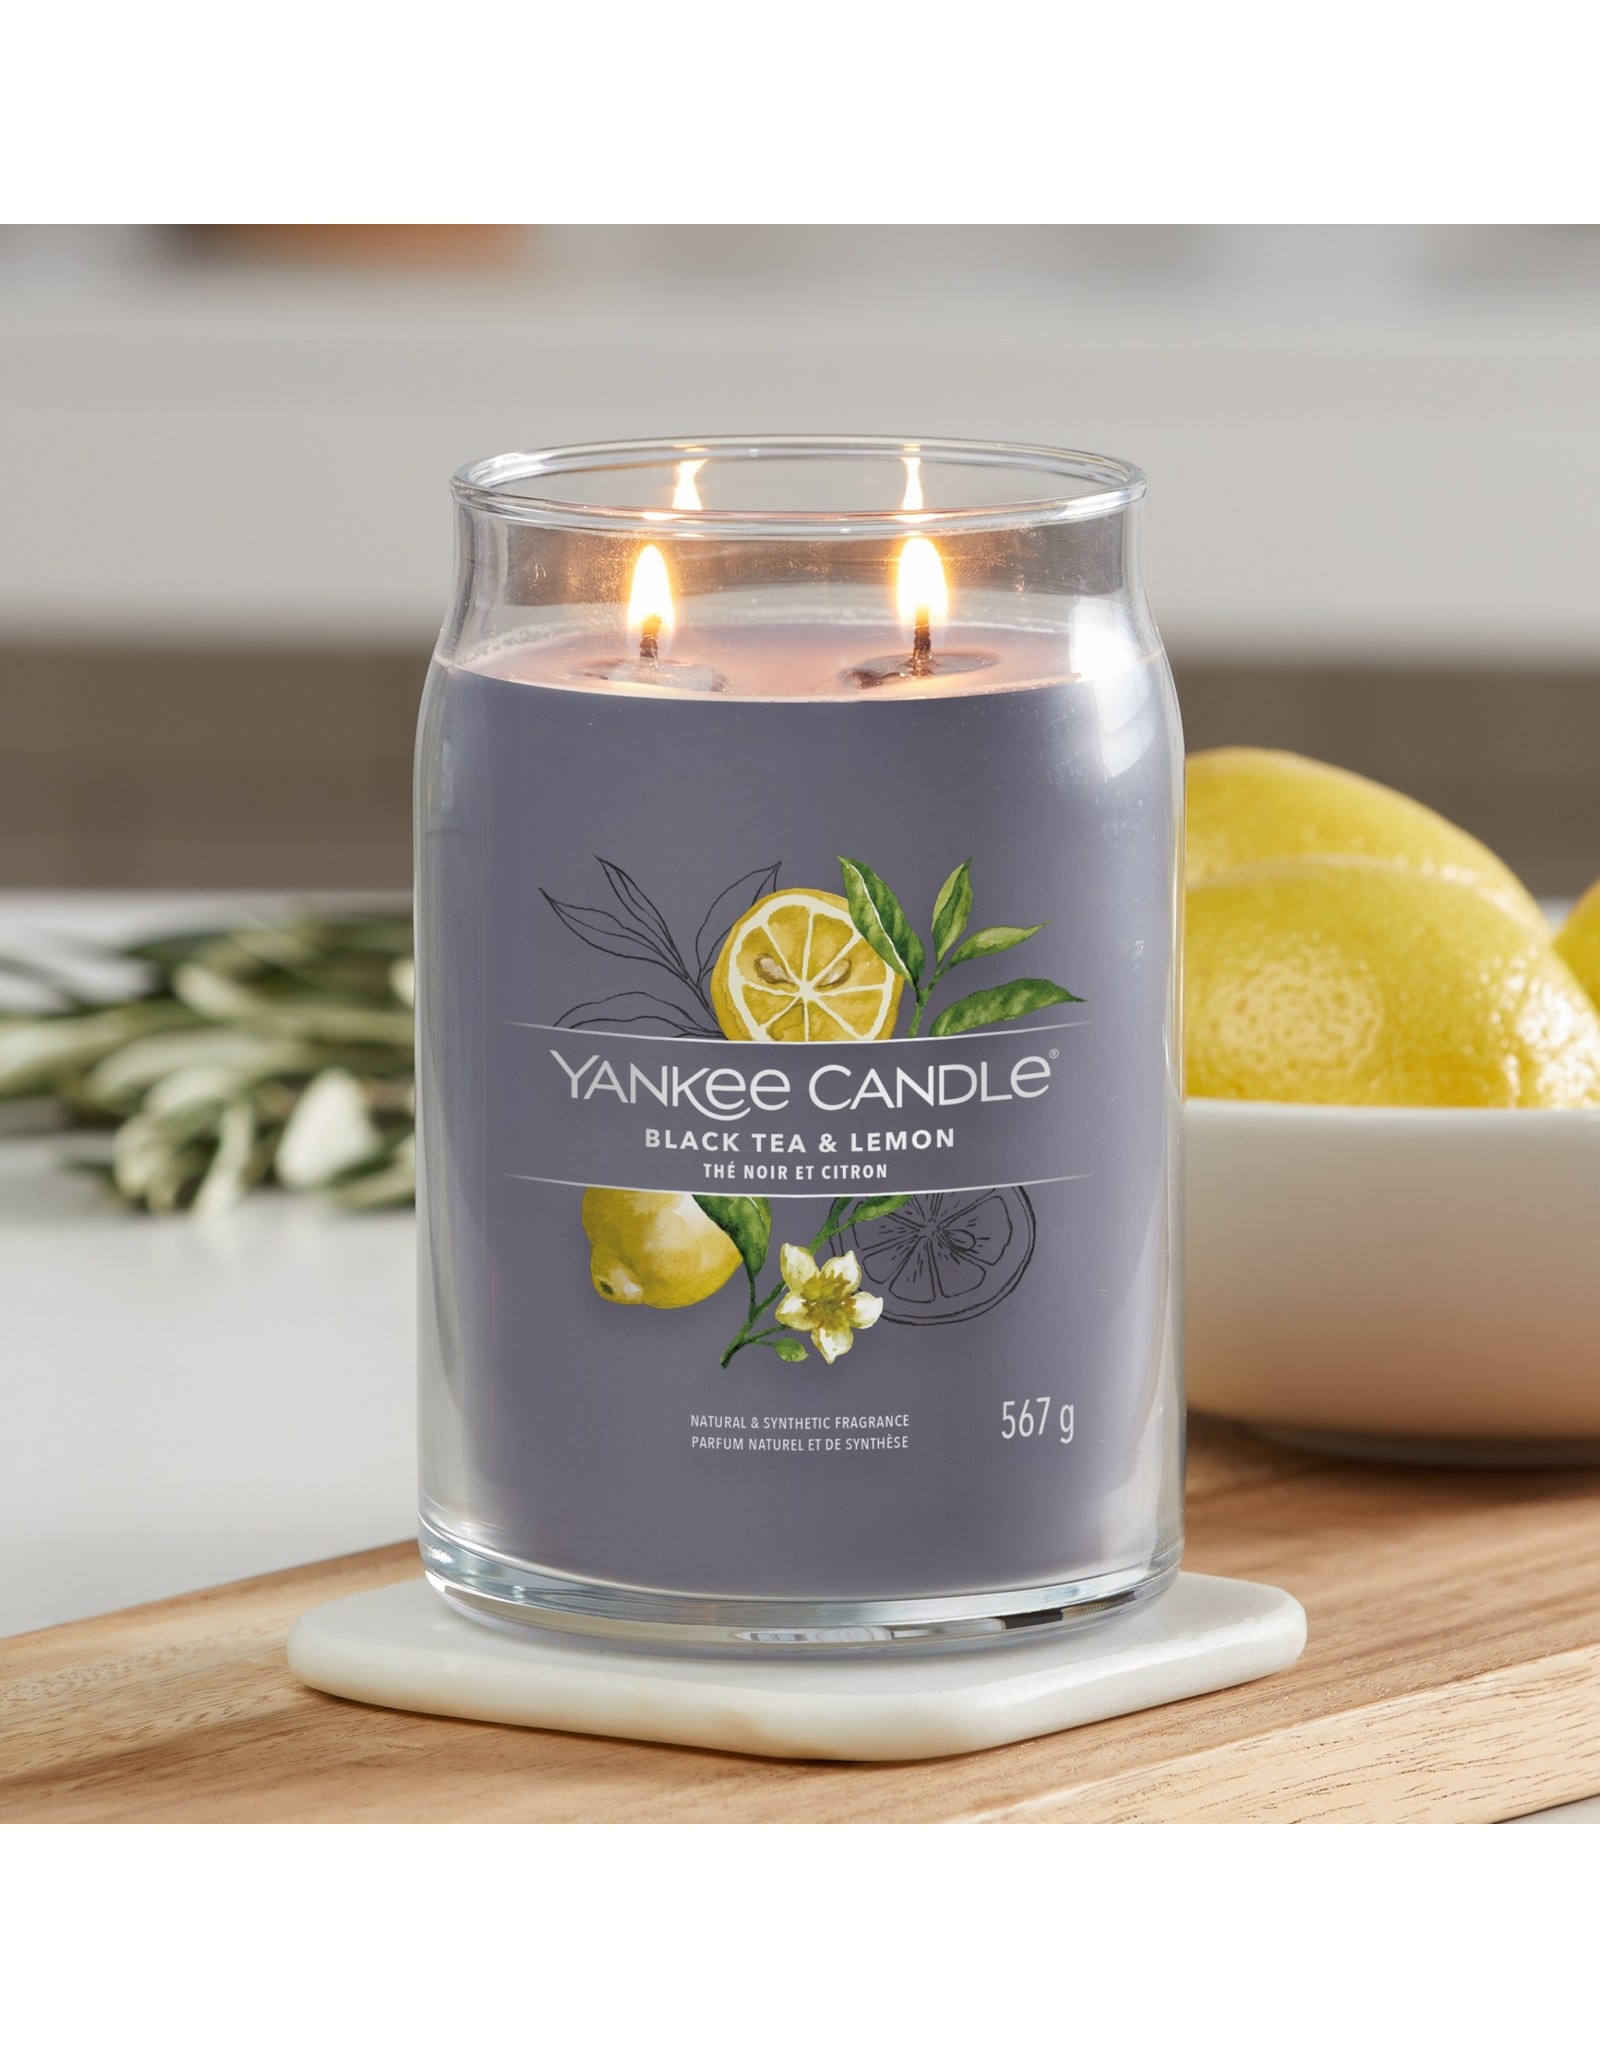 Yankee Candle - Black Tea & Lemon - Signature Large Jar